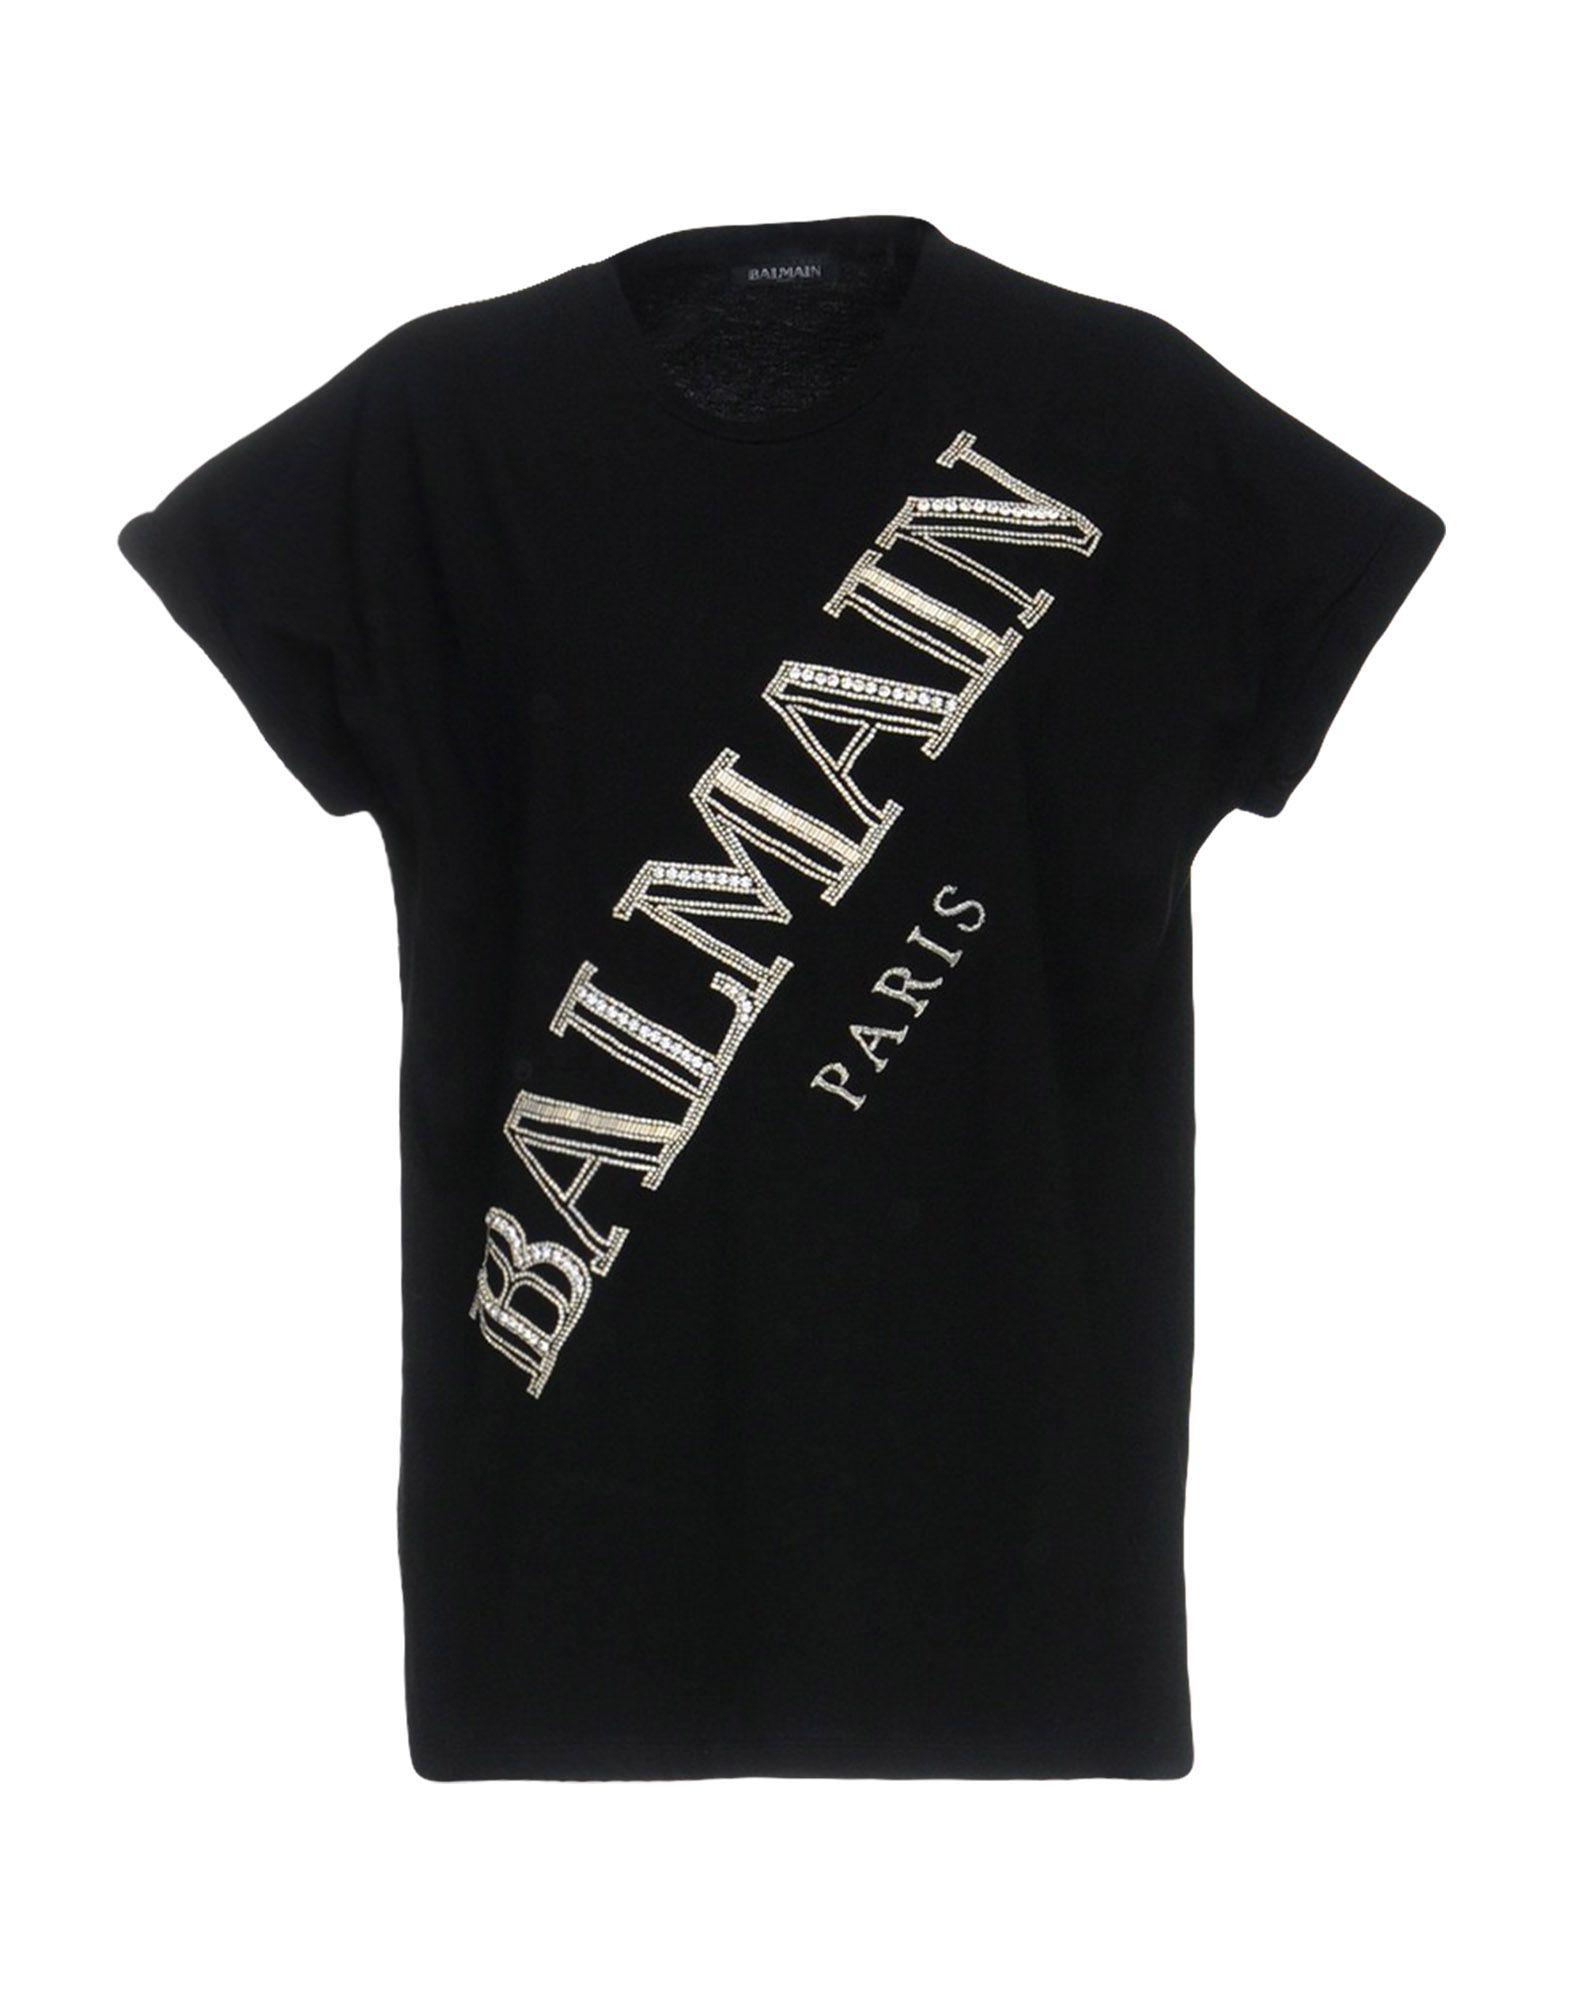 Balmain Cotton T-shirt in Black - Lyst